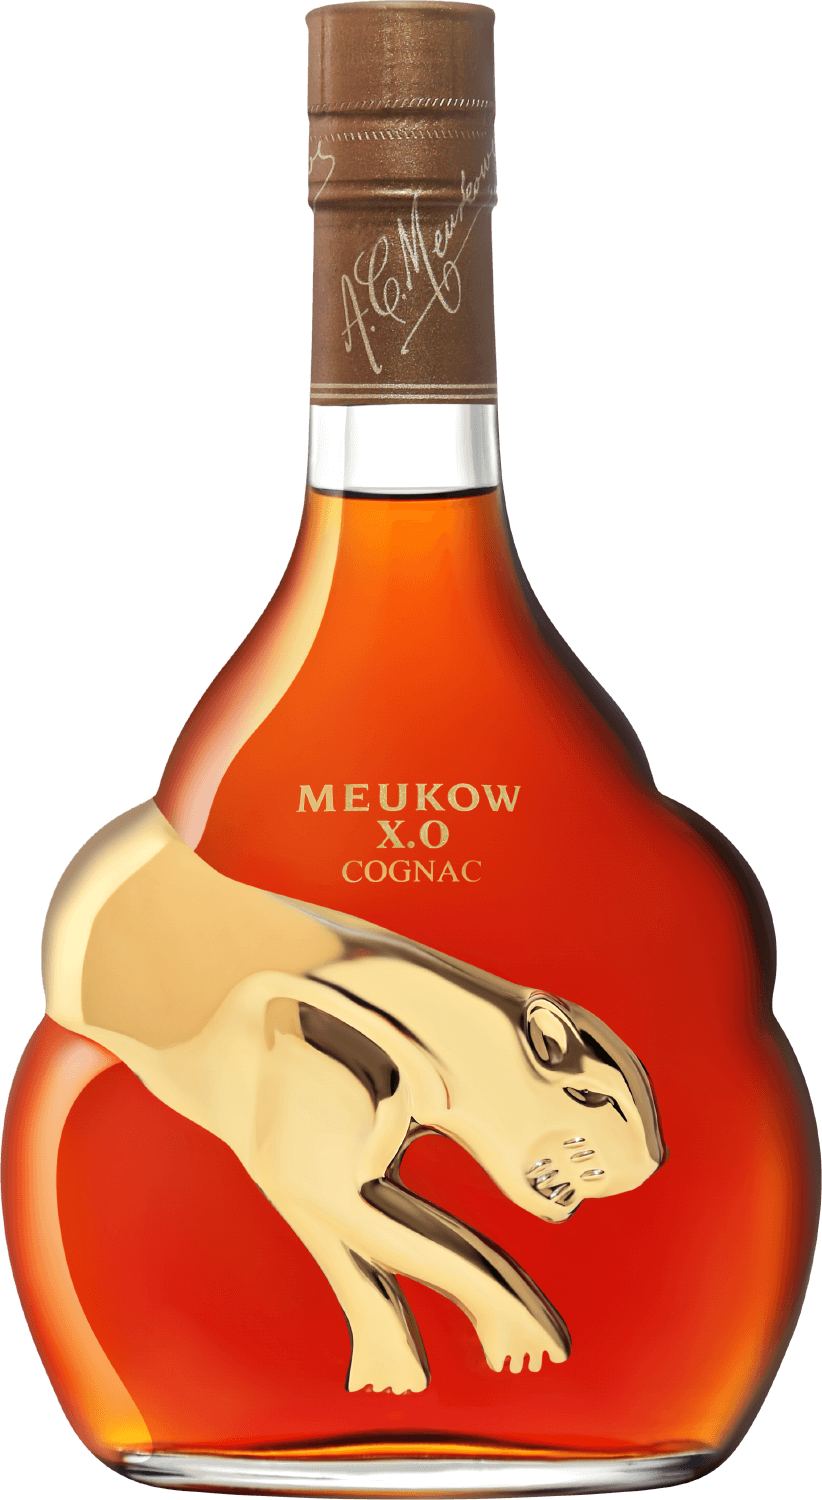 Meukow cognac. Meukow XO Cognac. XO Cognac Meukow 05. Коньяк Меуков Хо 0.5.